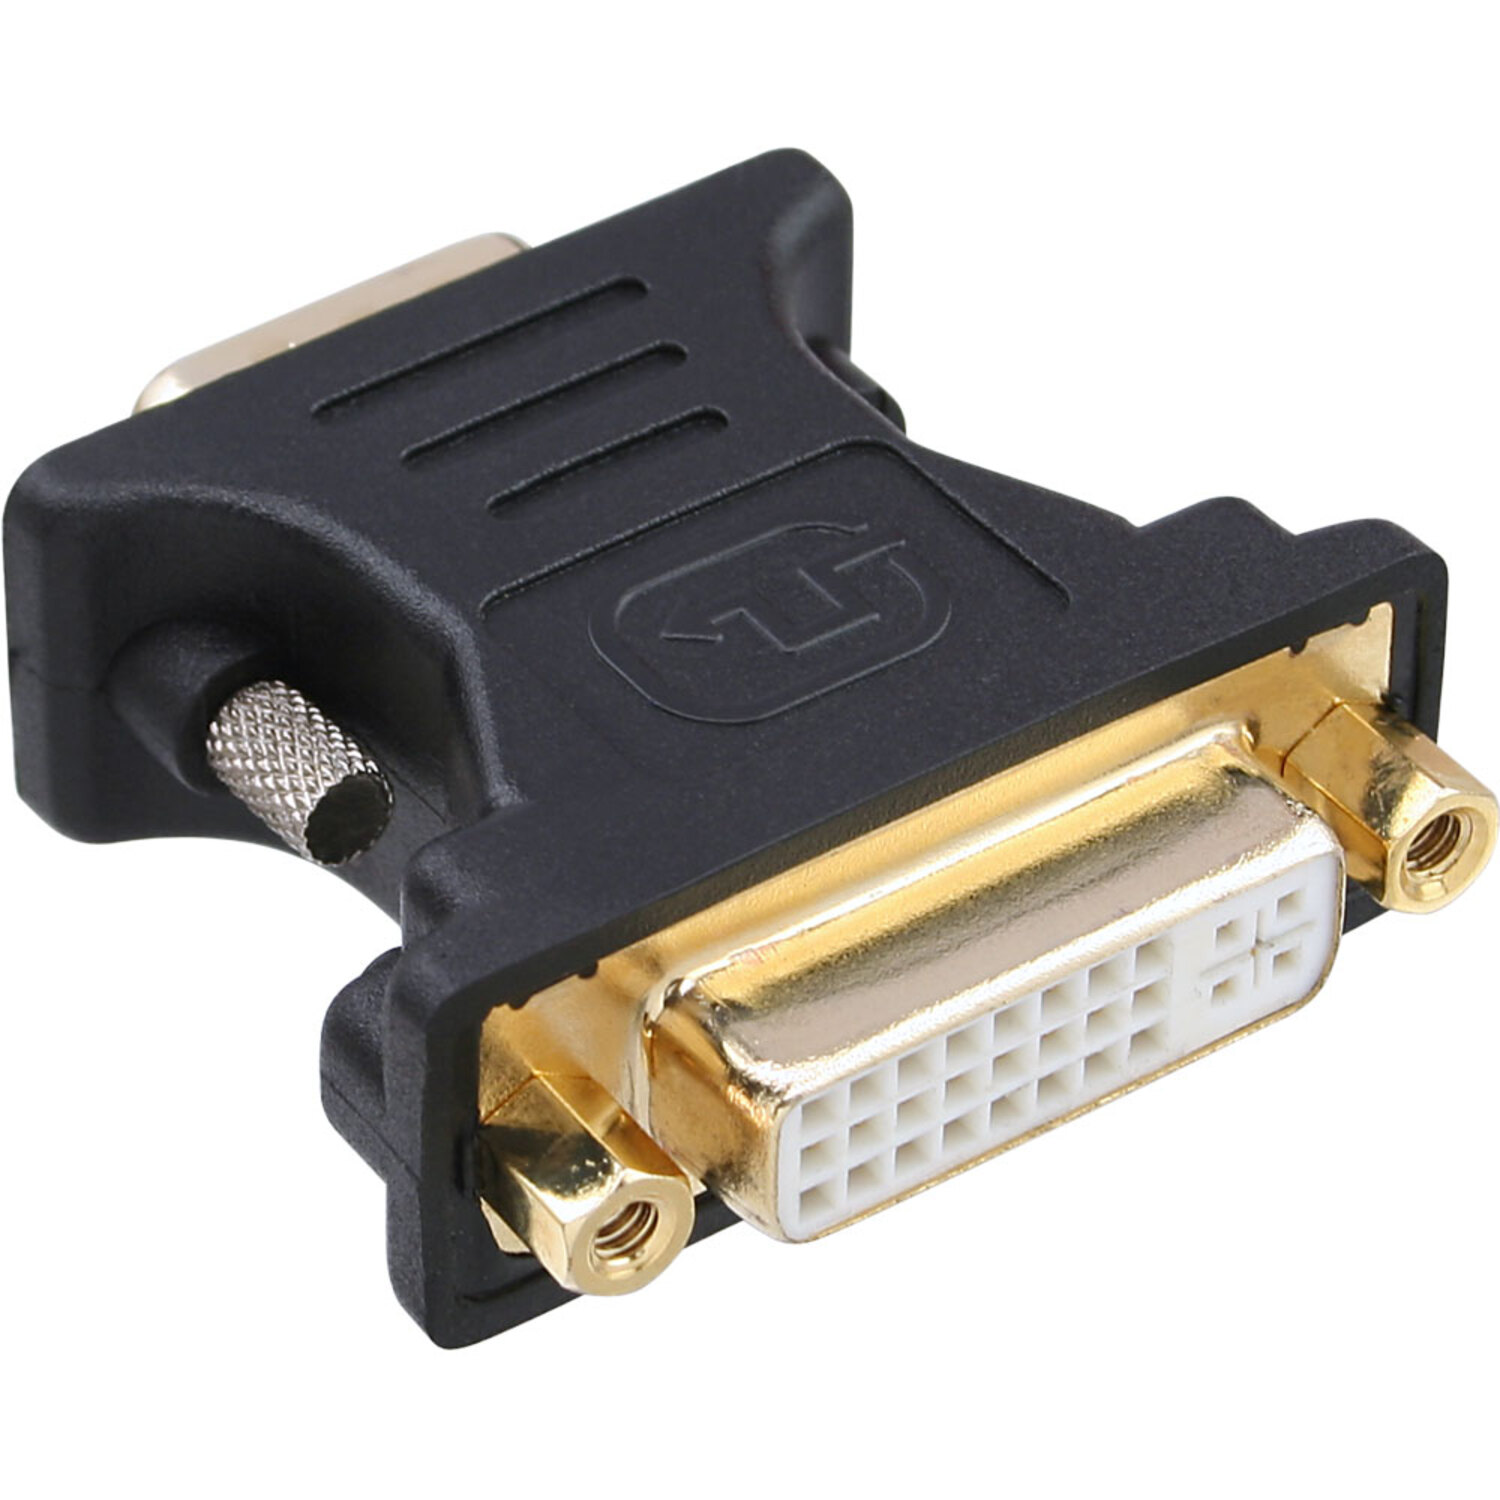 Analog 24+5 auf DVI / INLINE 15pol DVI-A Adapter, InLine® zu DVI VGA HD Stecker / Buchse DFP (VGA),